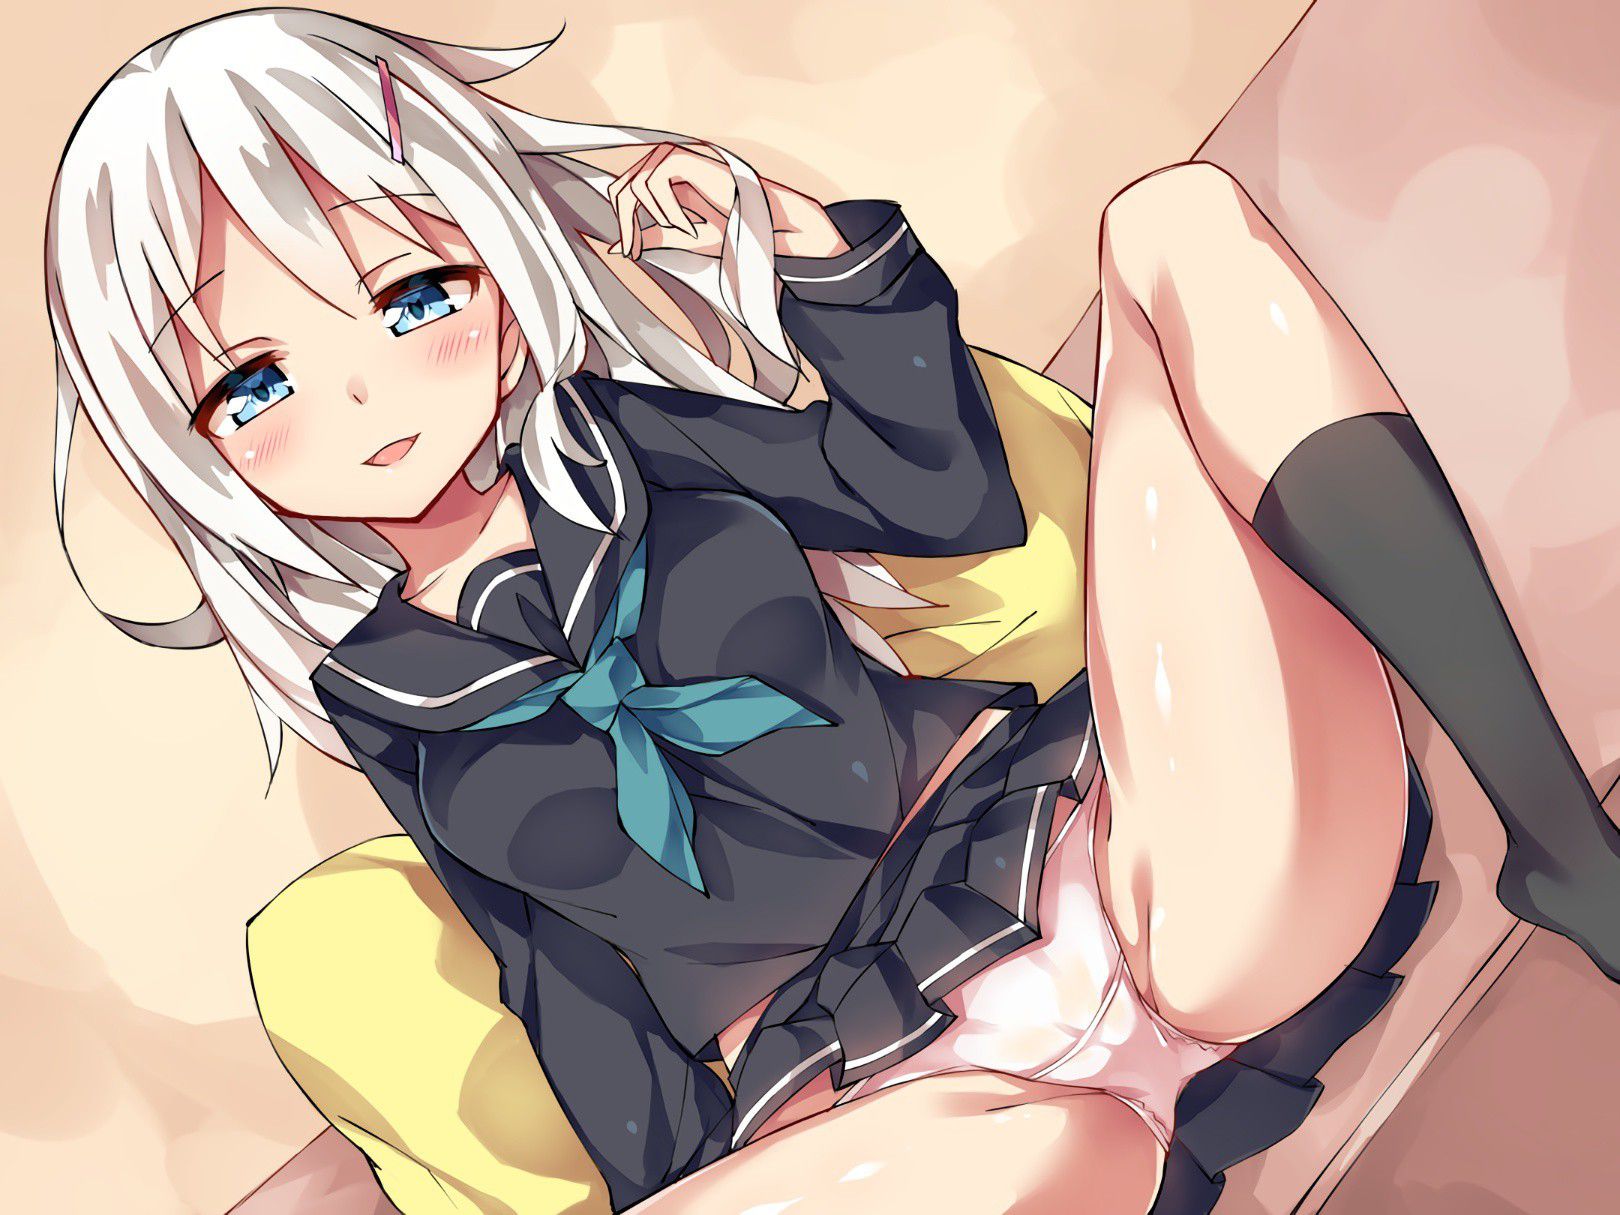 Erotic anime summary Erotic images of beautiful girls wearing uniforms [secondary erotic] 25